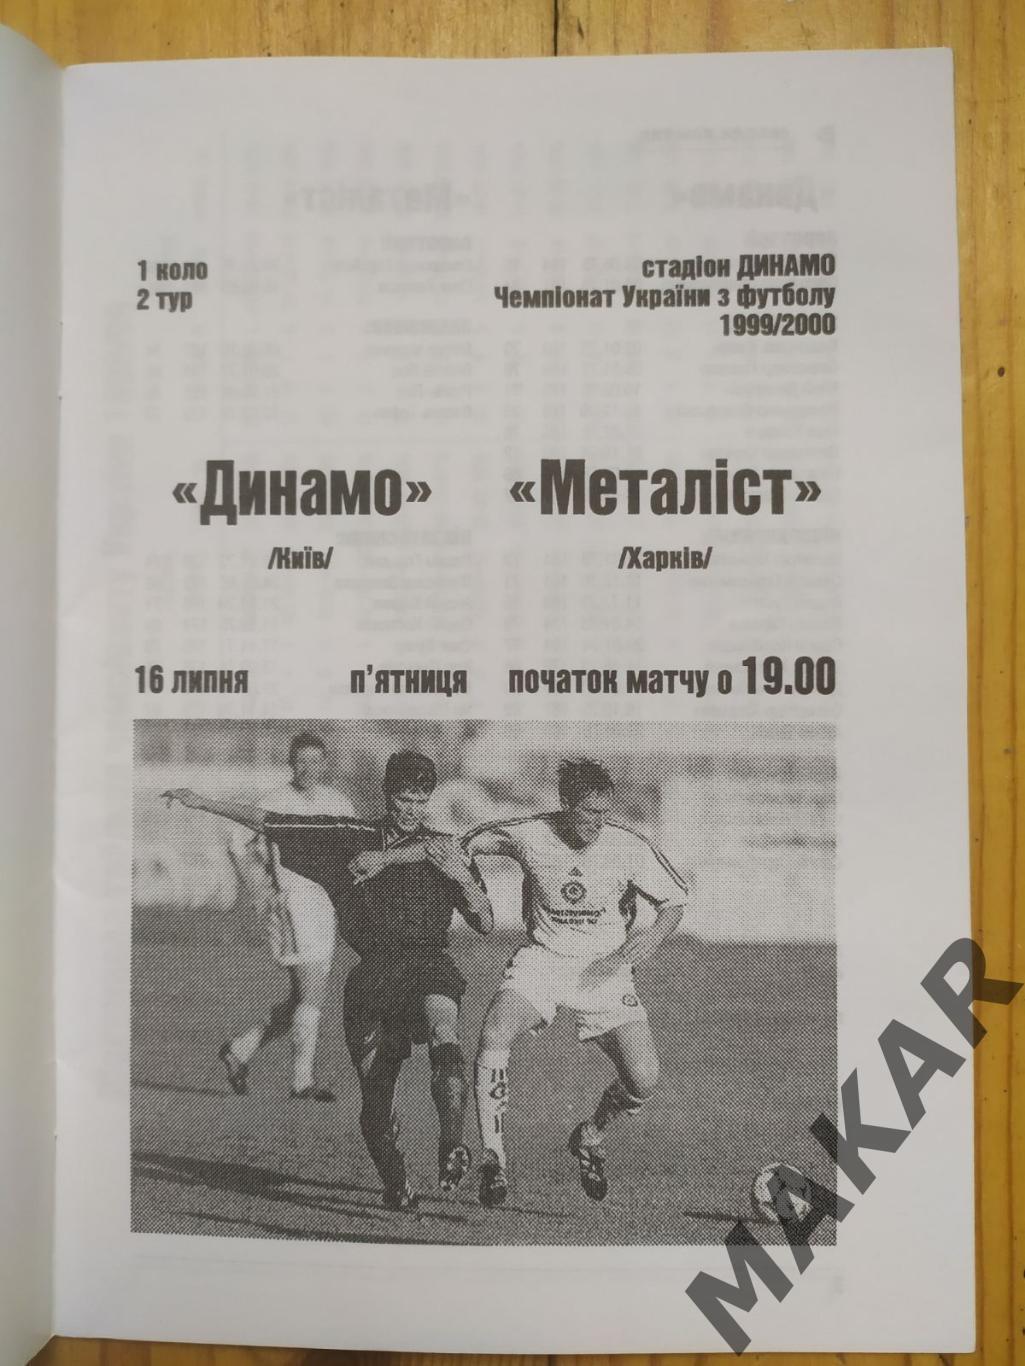 Динамо Киев Металлист Харьков 16.07.1999 1